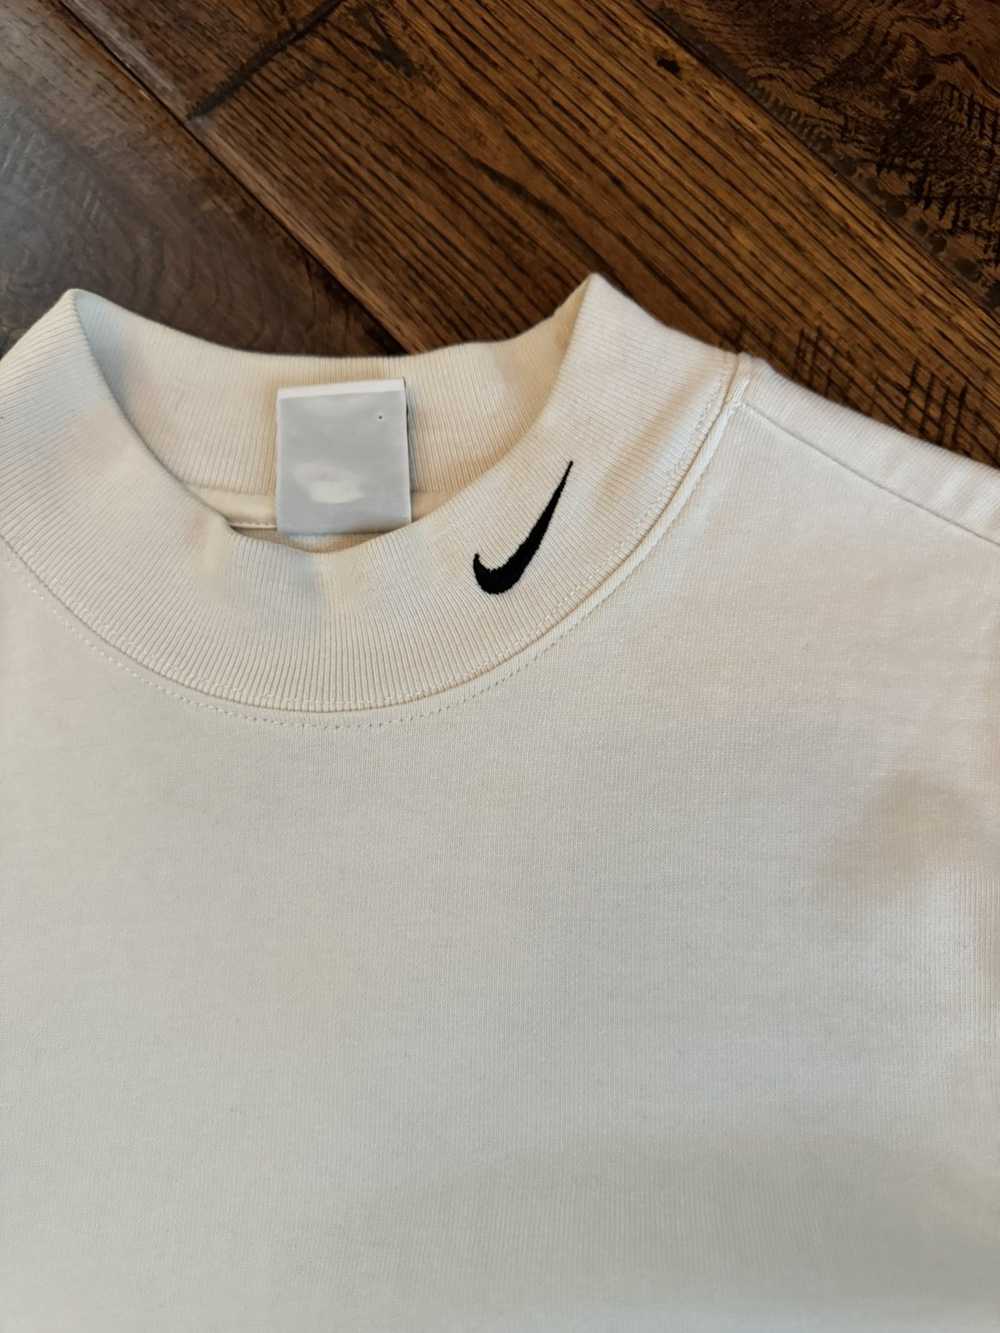 Nike Long Sleeve Turtleneck - image 2